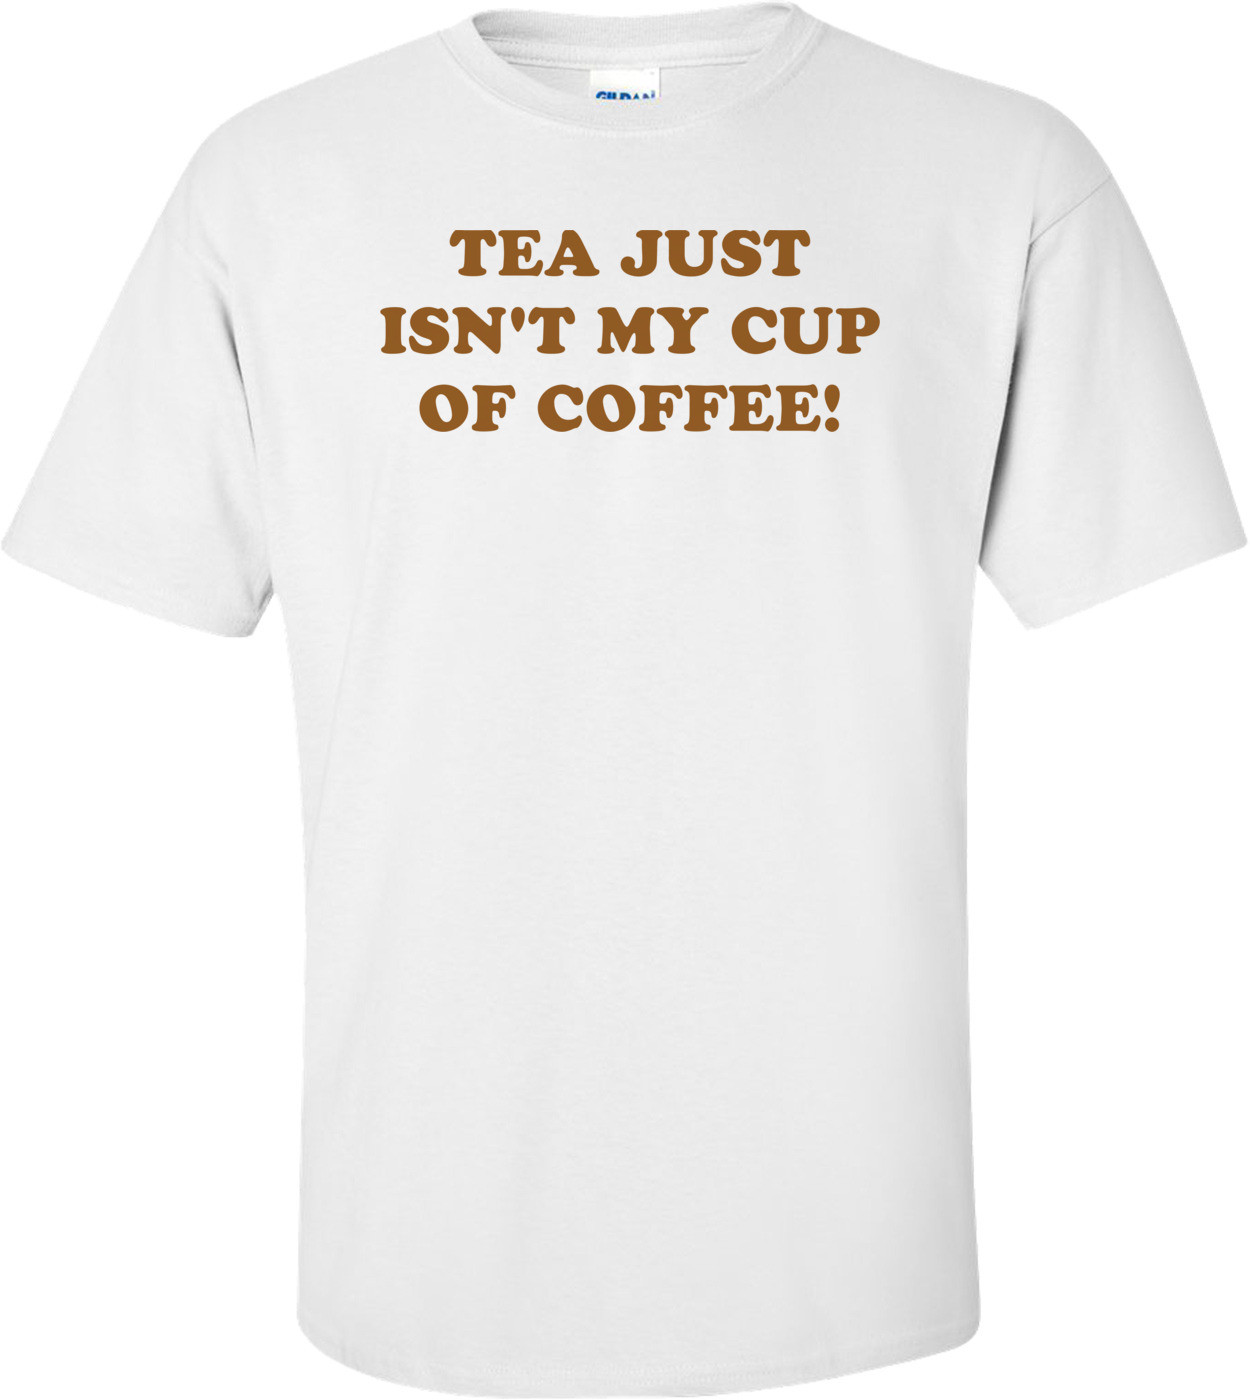 TEA JUST ISN'T MY CUP OF COFFEE! Shirt